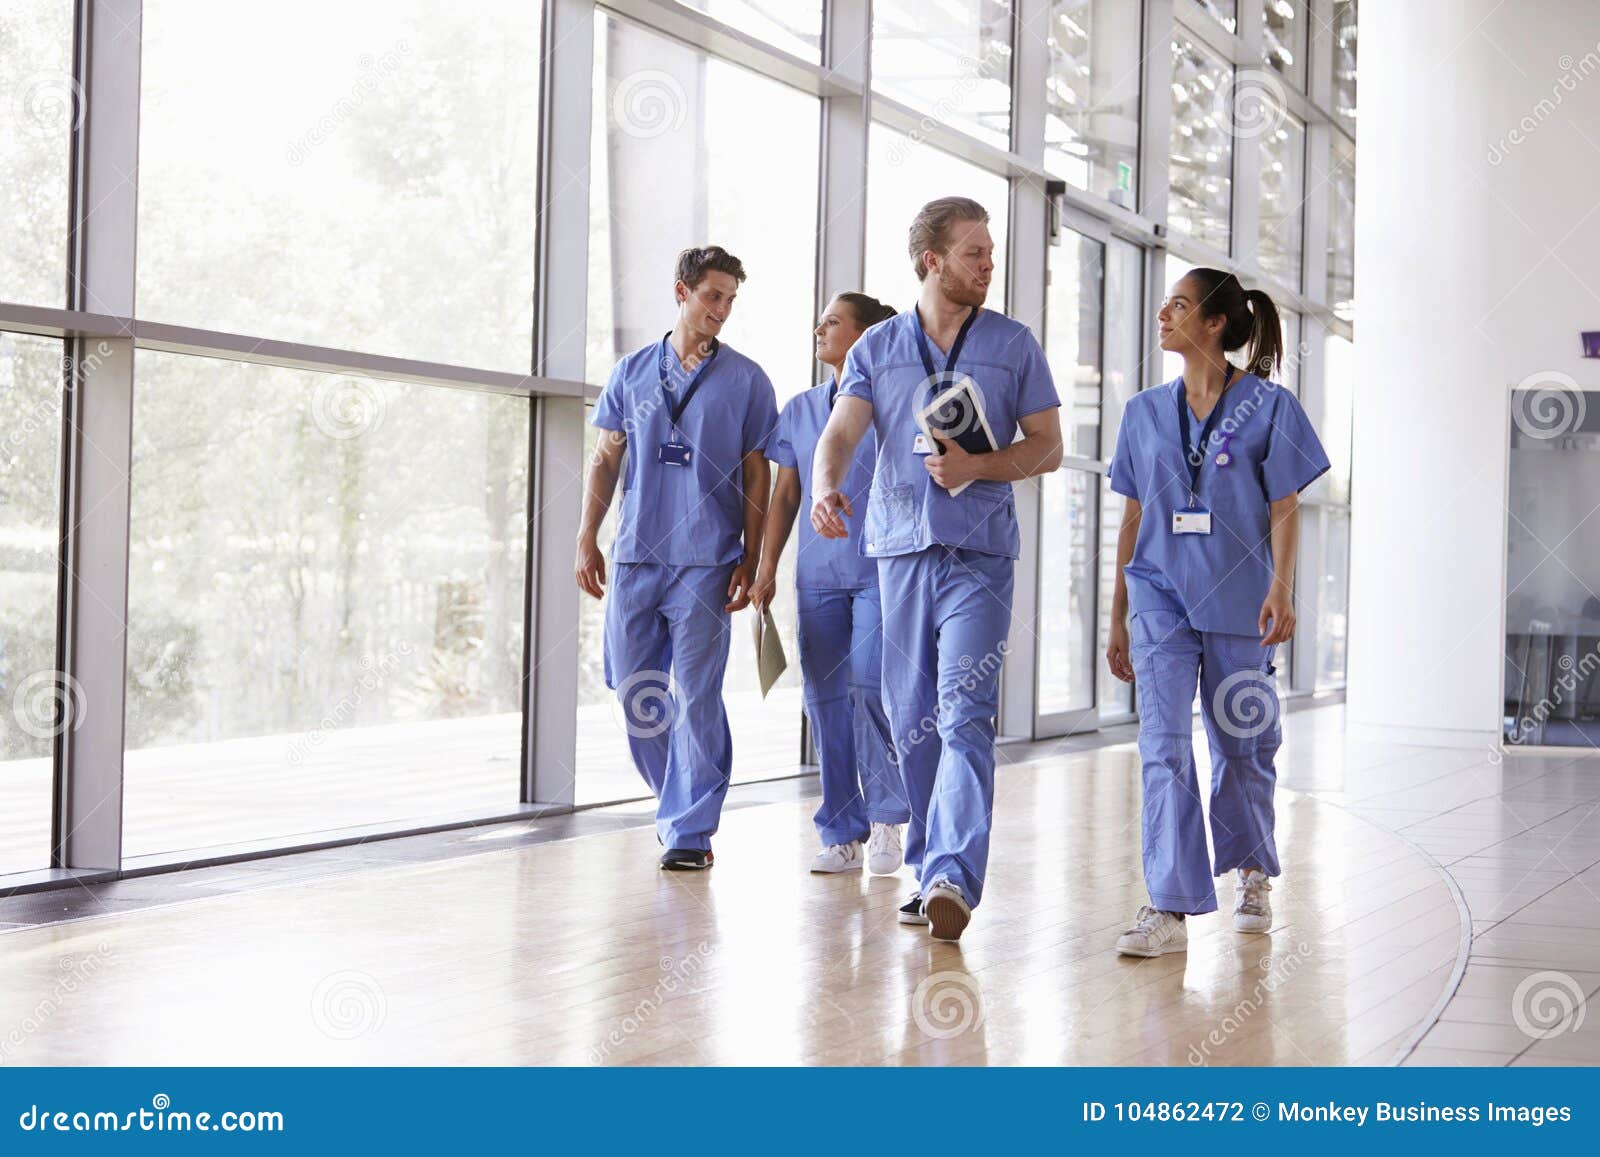 four healthcare workers in scrubs walking in corridor